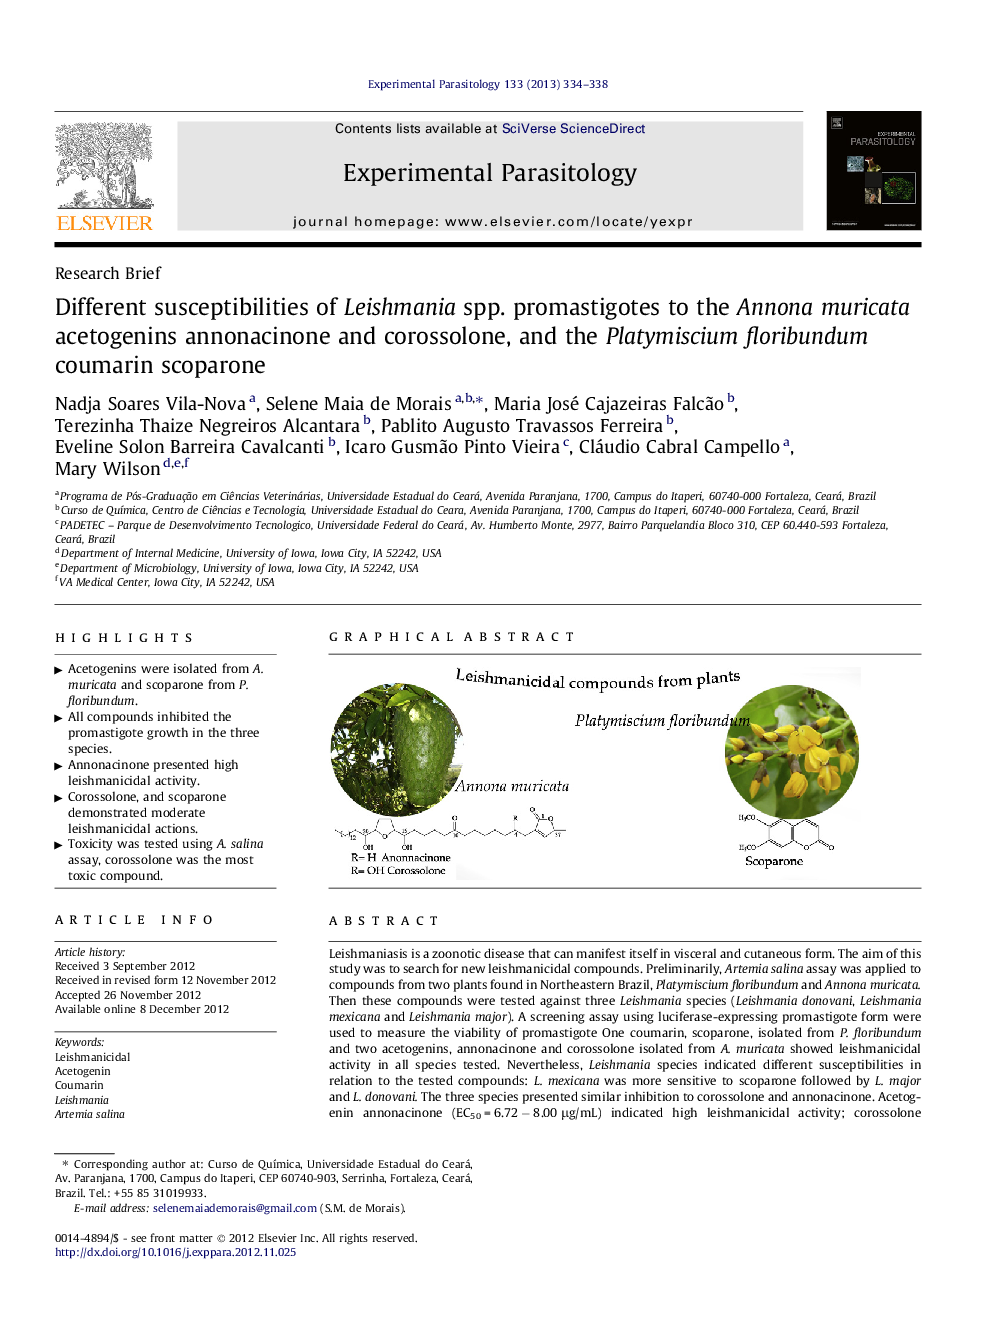 Different susceptibilities of Leishmania spp. promastigotes to the Annona muricata acetogenins annonacinone and corossolone, and the Platymiscium floribundum coumarin scoparone